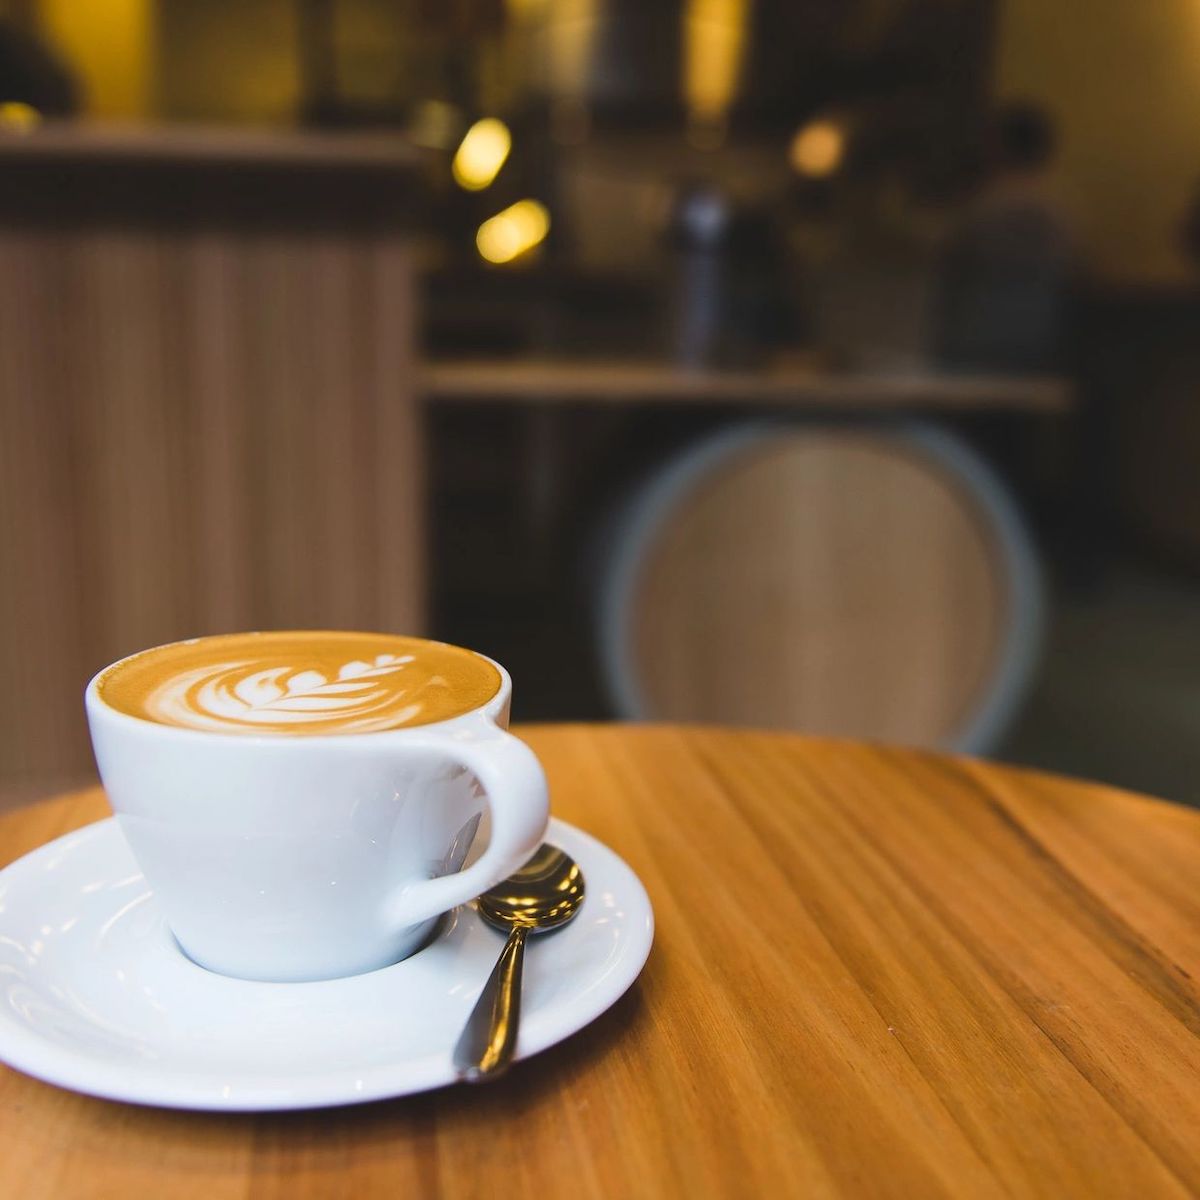 Complimentary Café & Co. Brings Espresso, Charcuterie, & More to Skokie